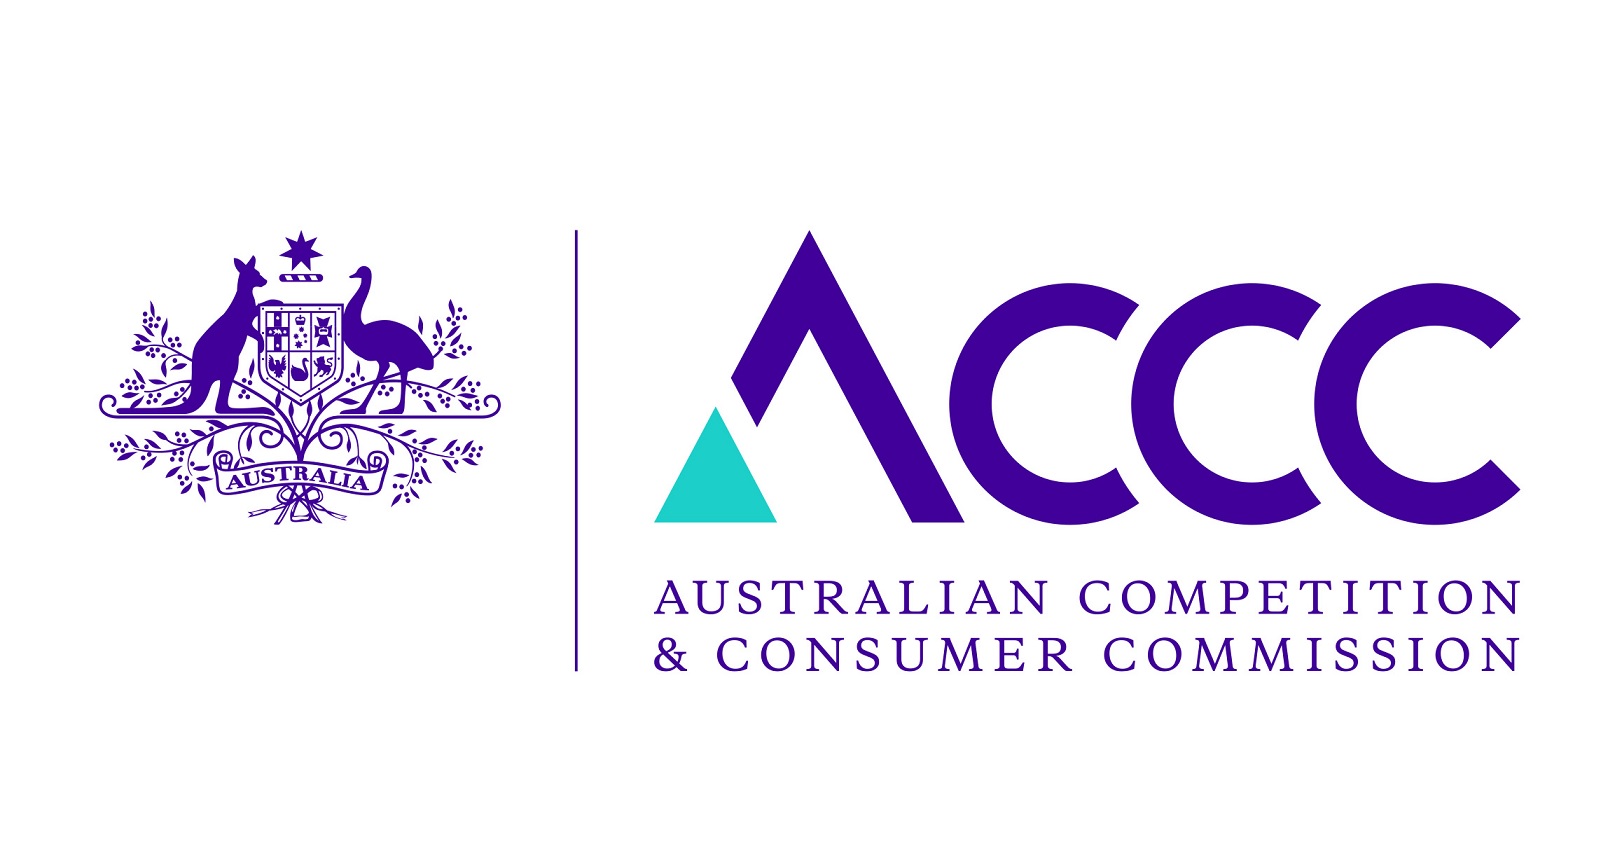 Over Half of Companies Potentially Greenwashing Says Australia Competition Regulator